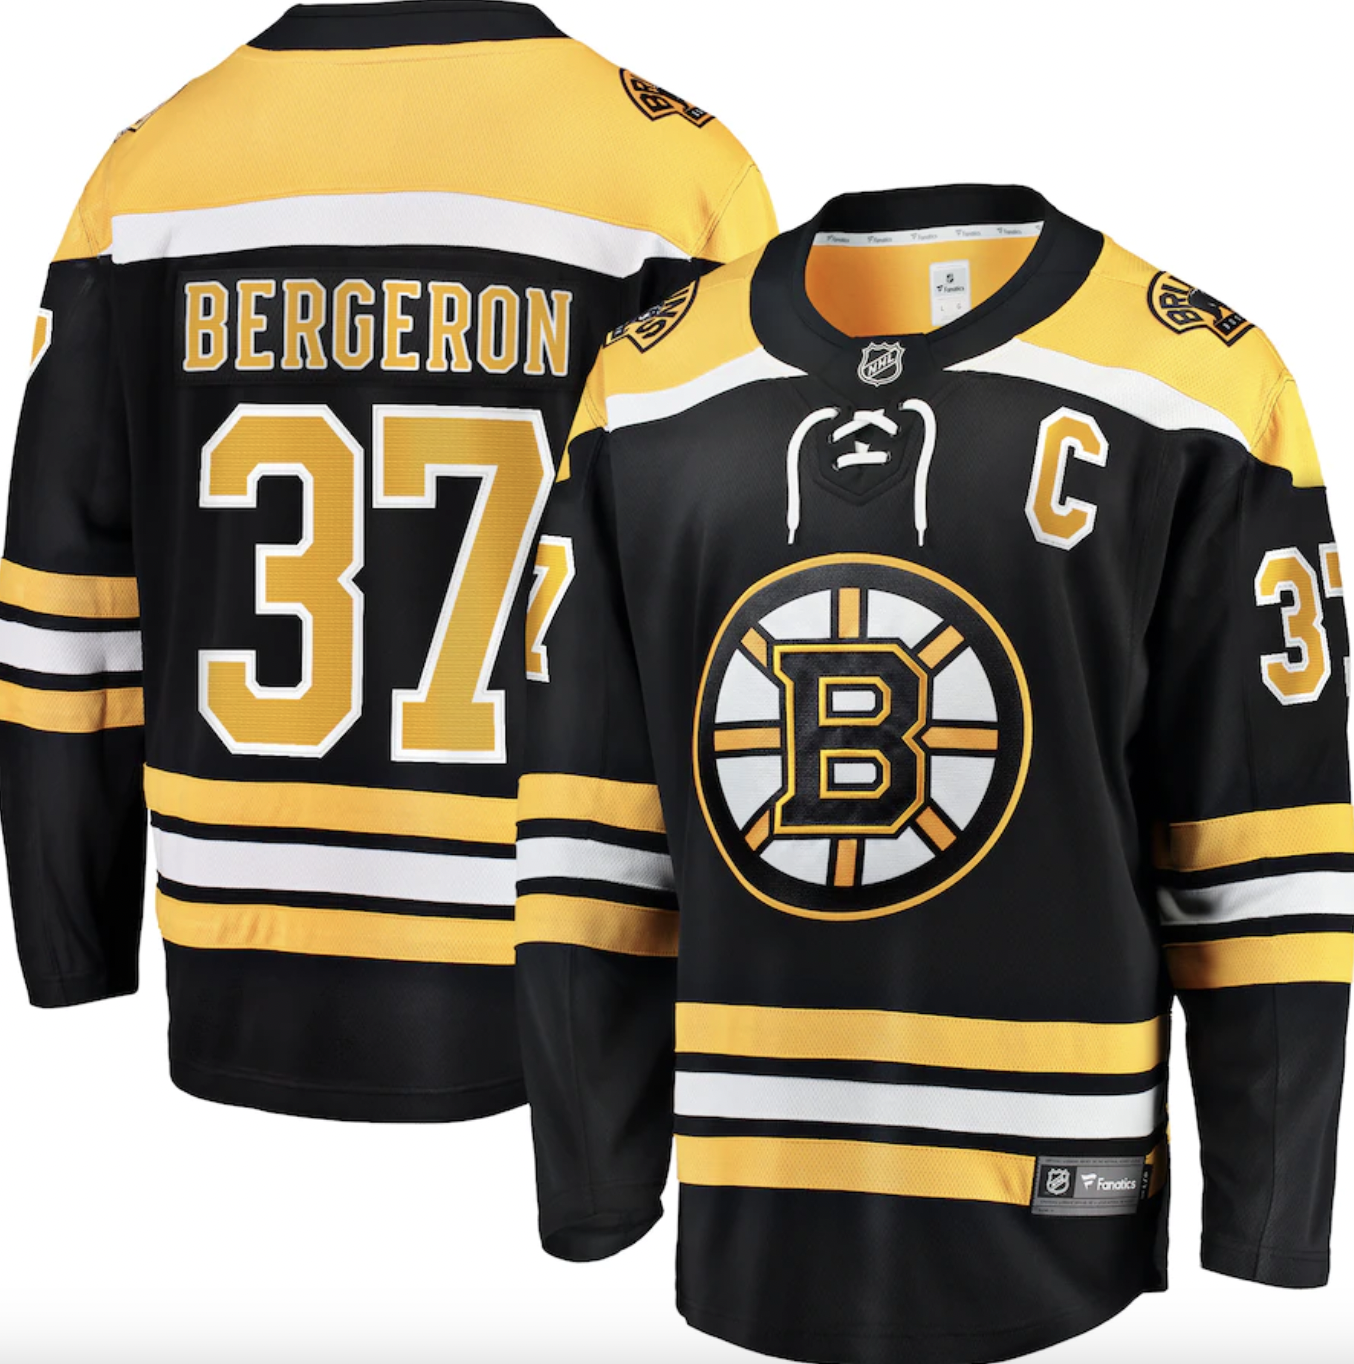 Boston Bruins Hockey Memorabilia & NHL Merchandise